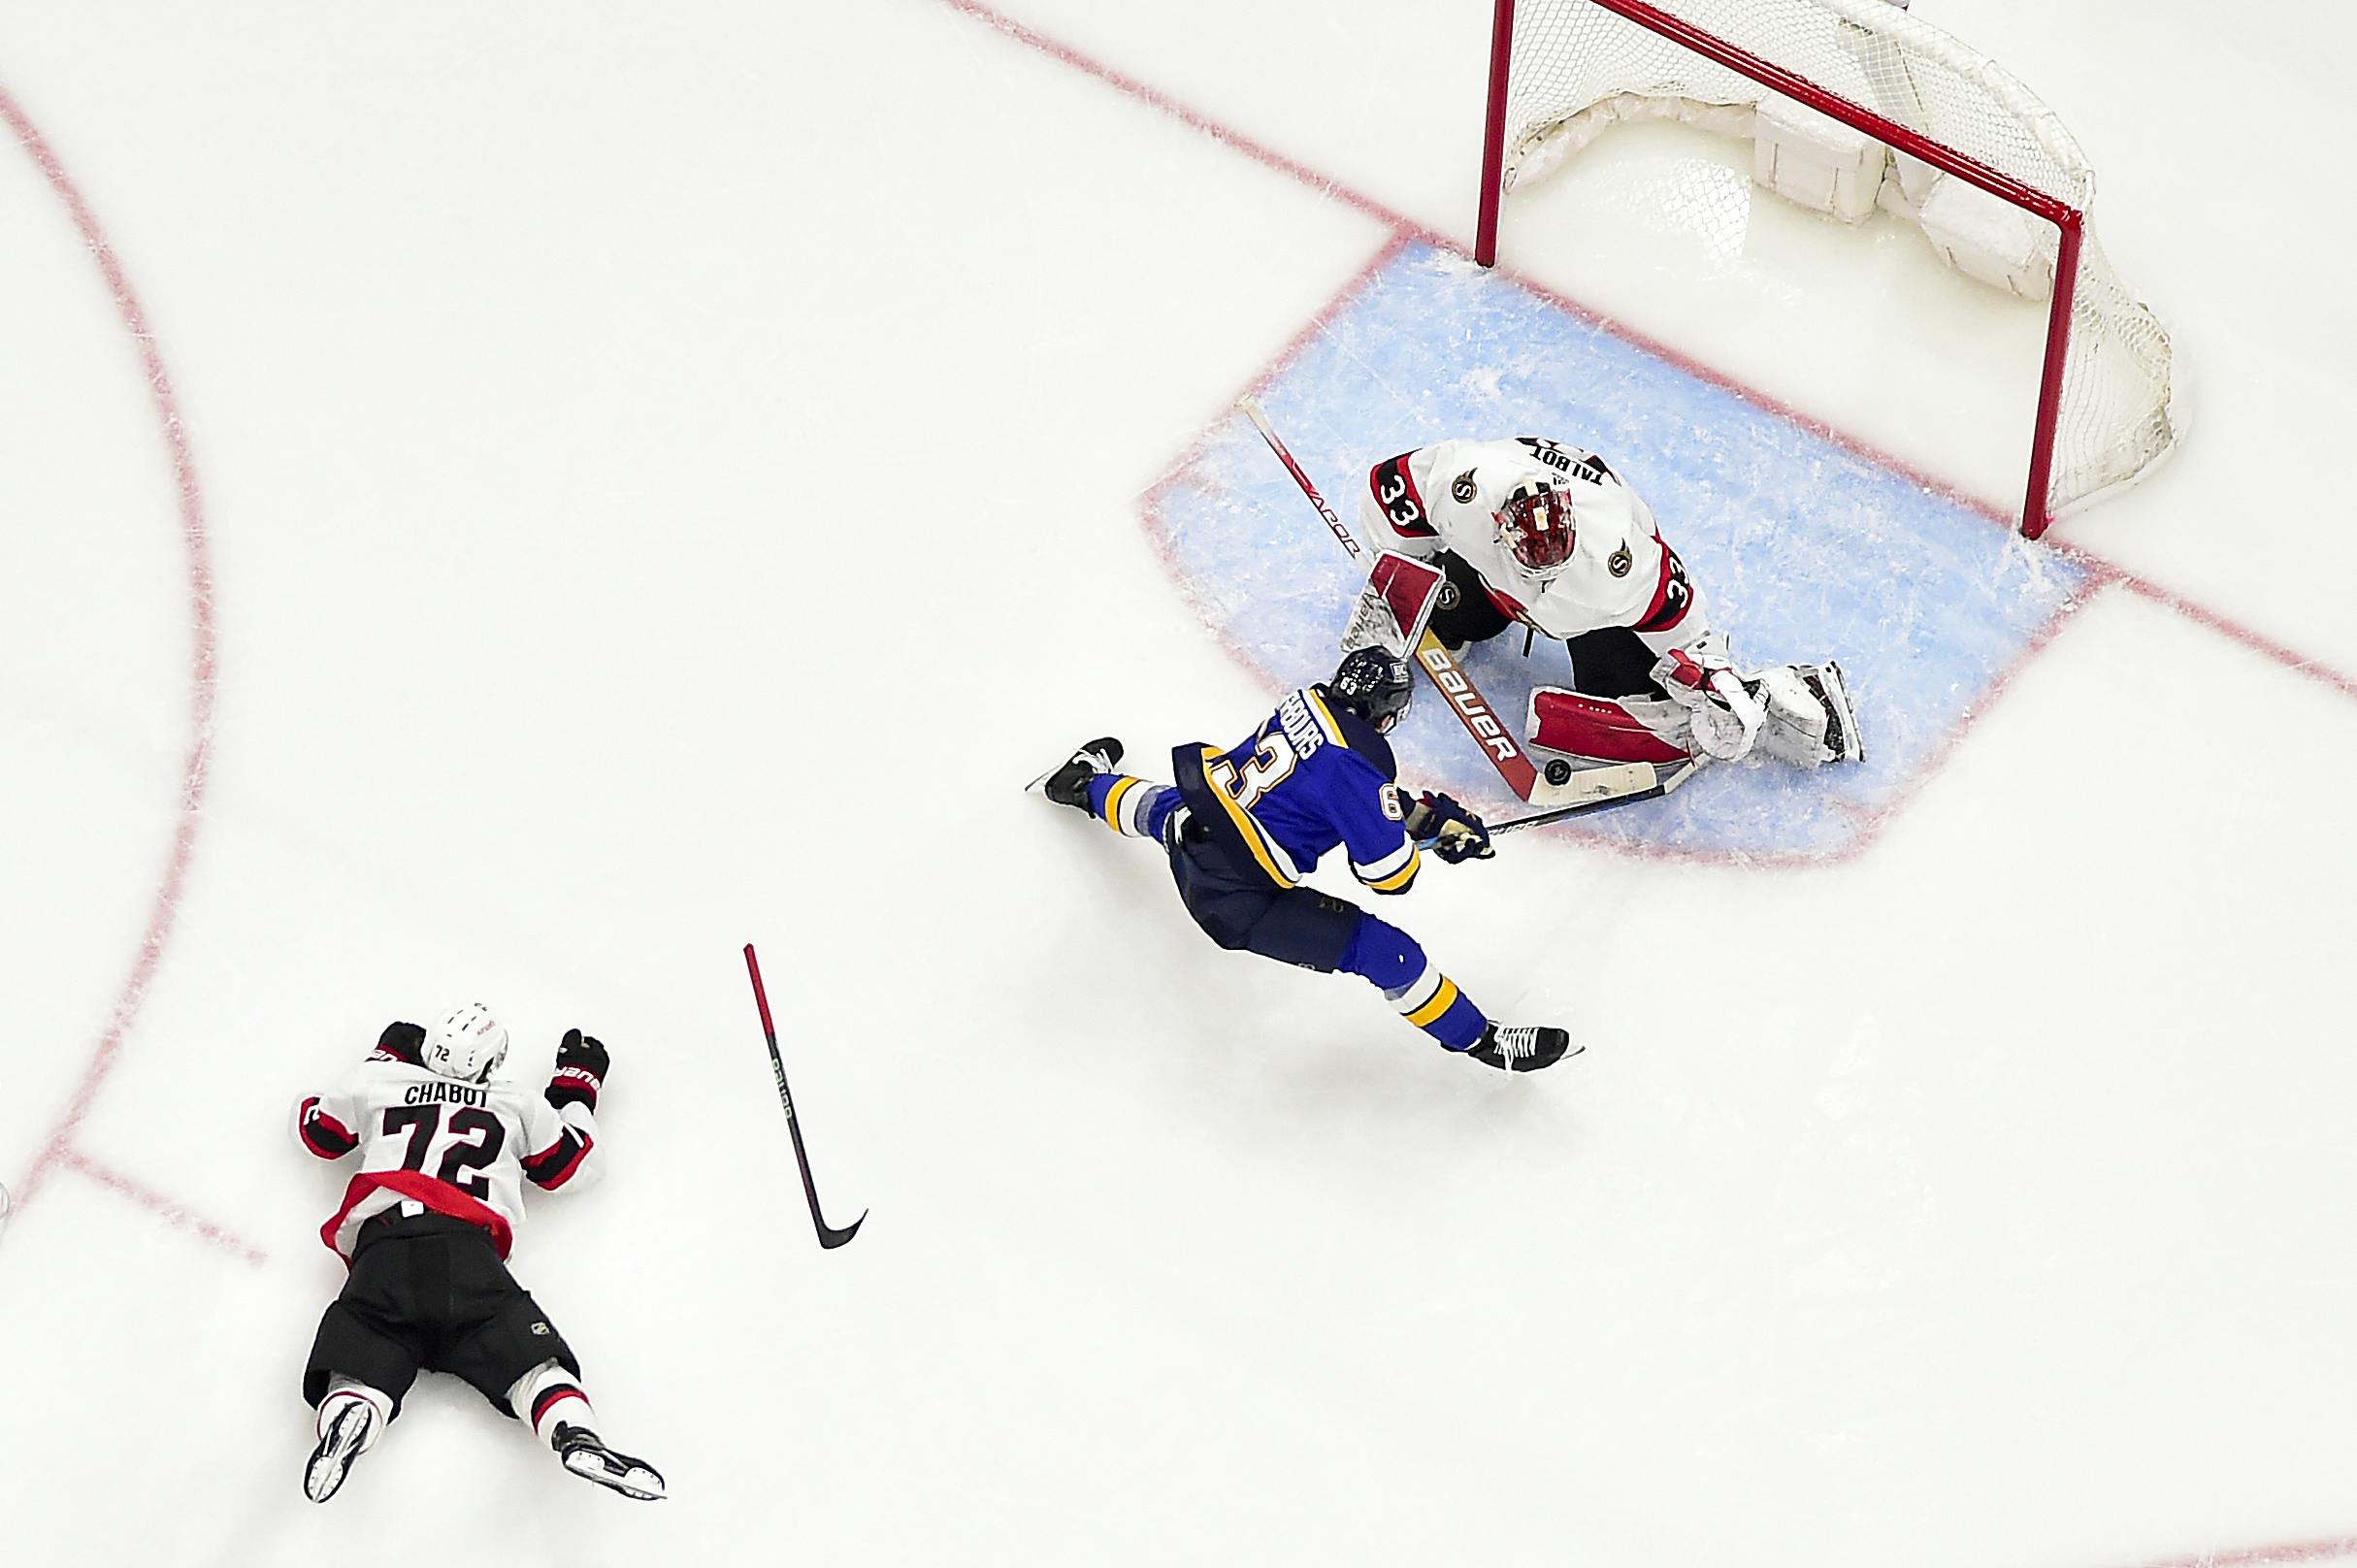 AHL Roundup: Binghamton Senators still with plenty to play for